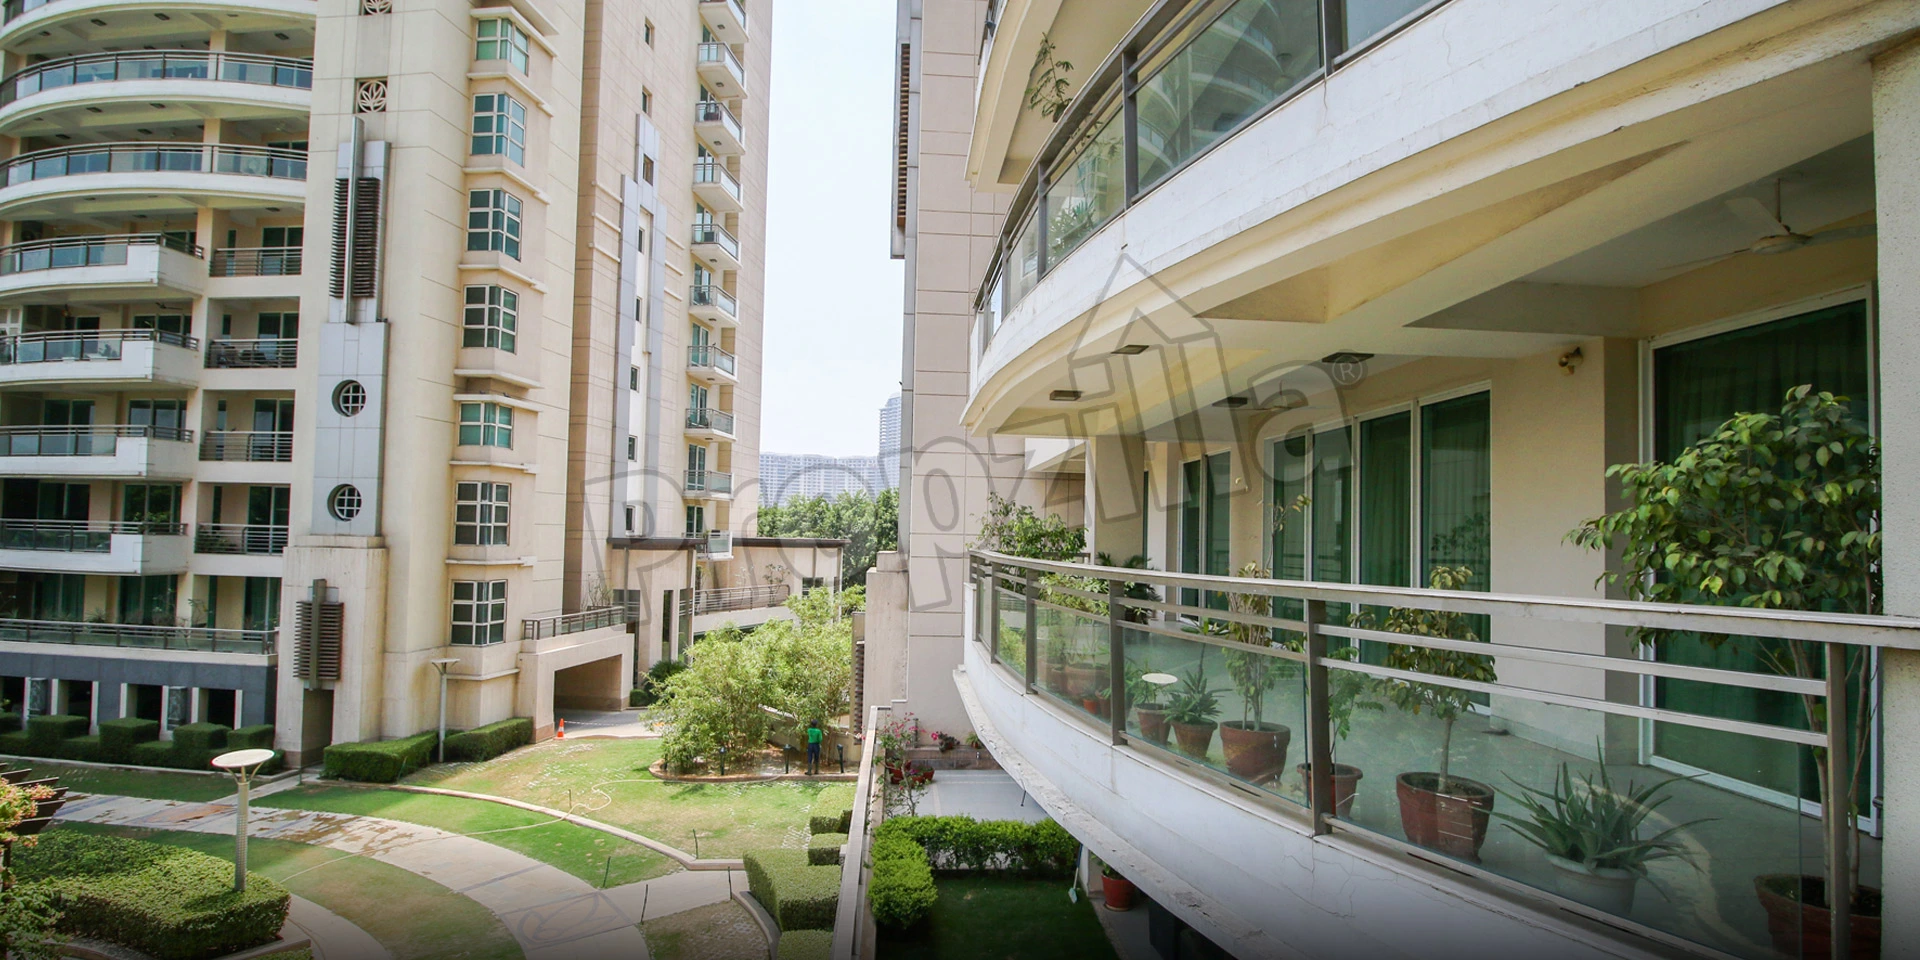 dlf aralias apartments